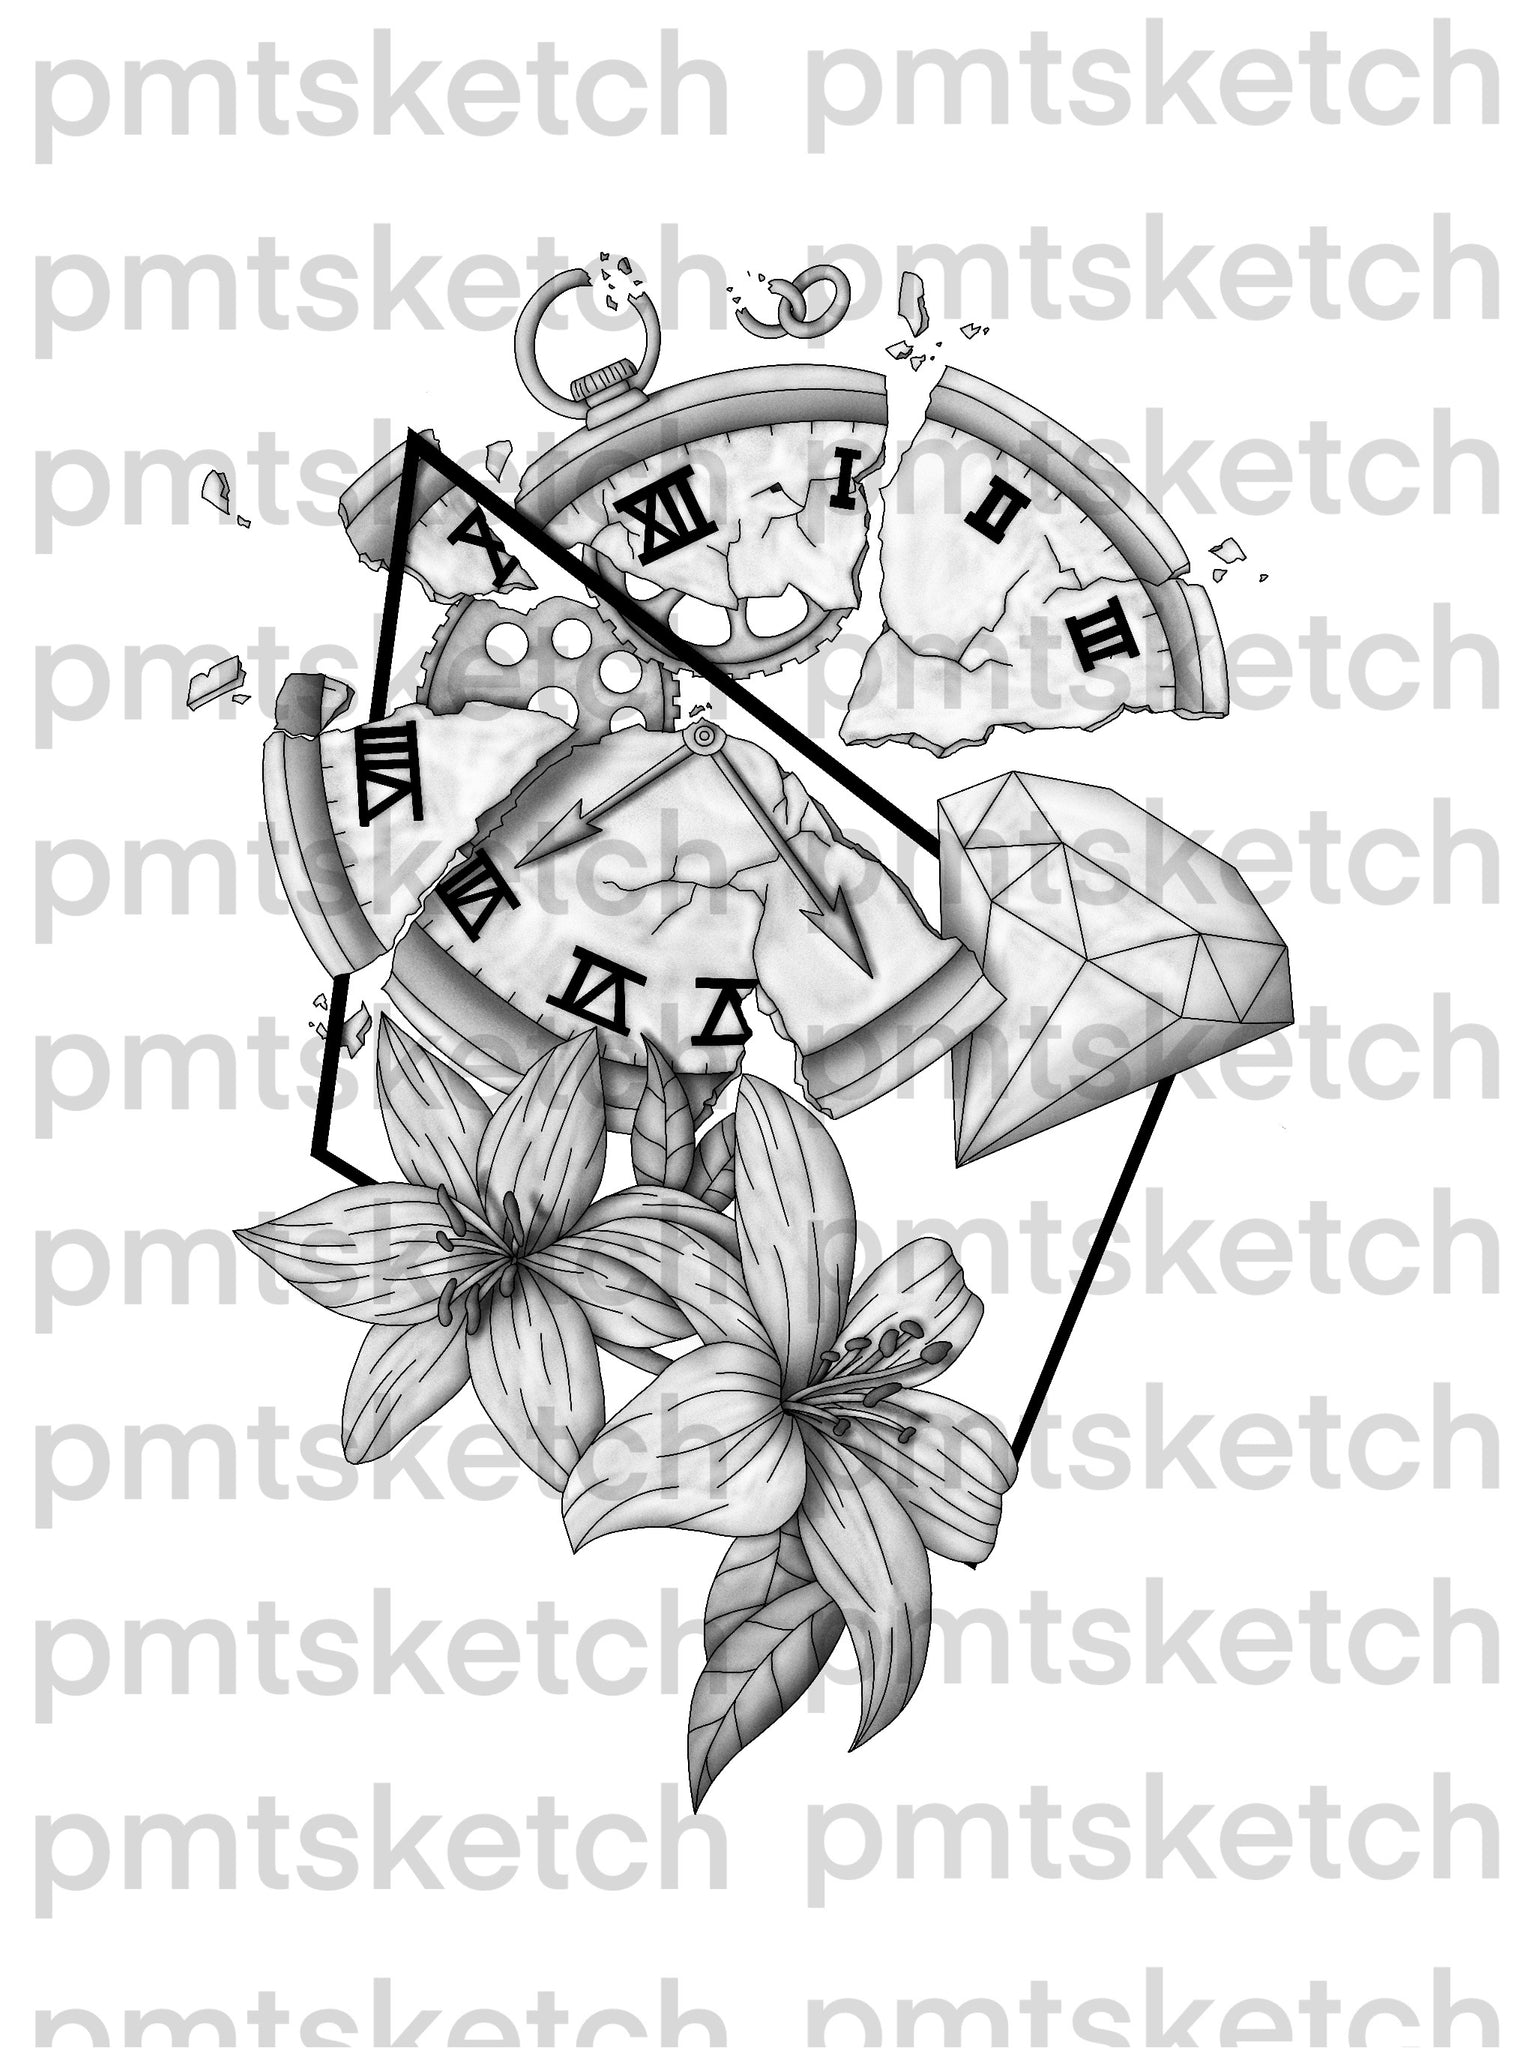 broken clock drawing